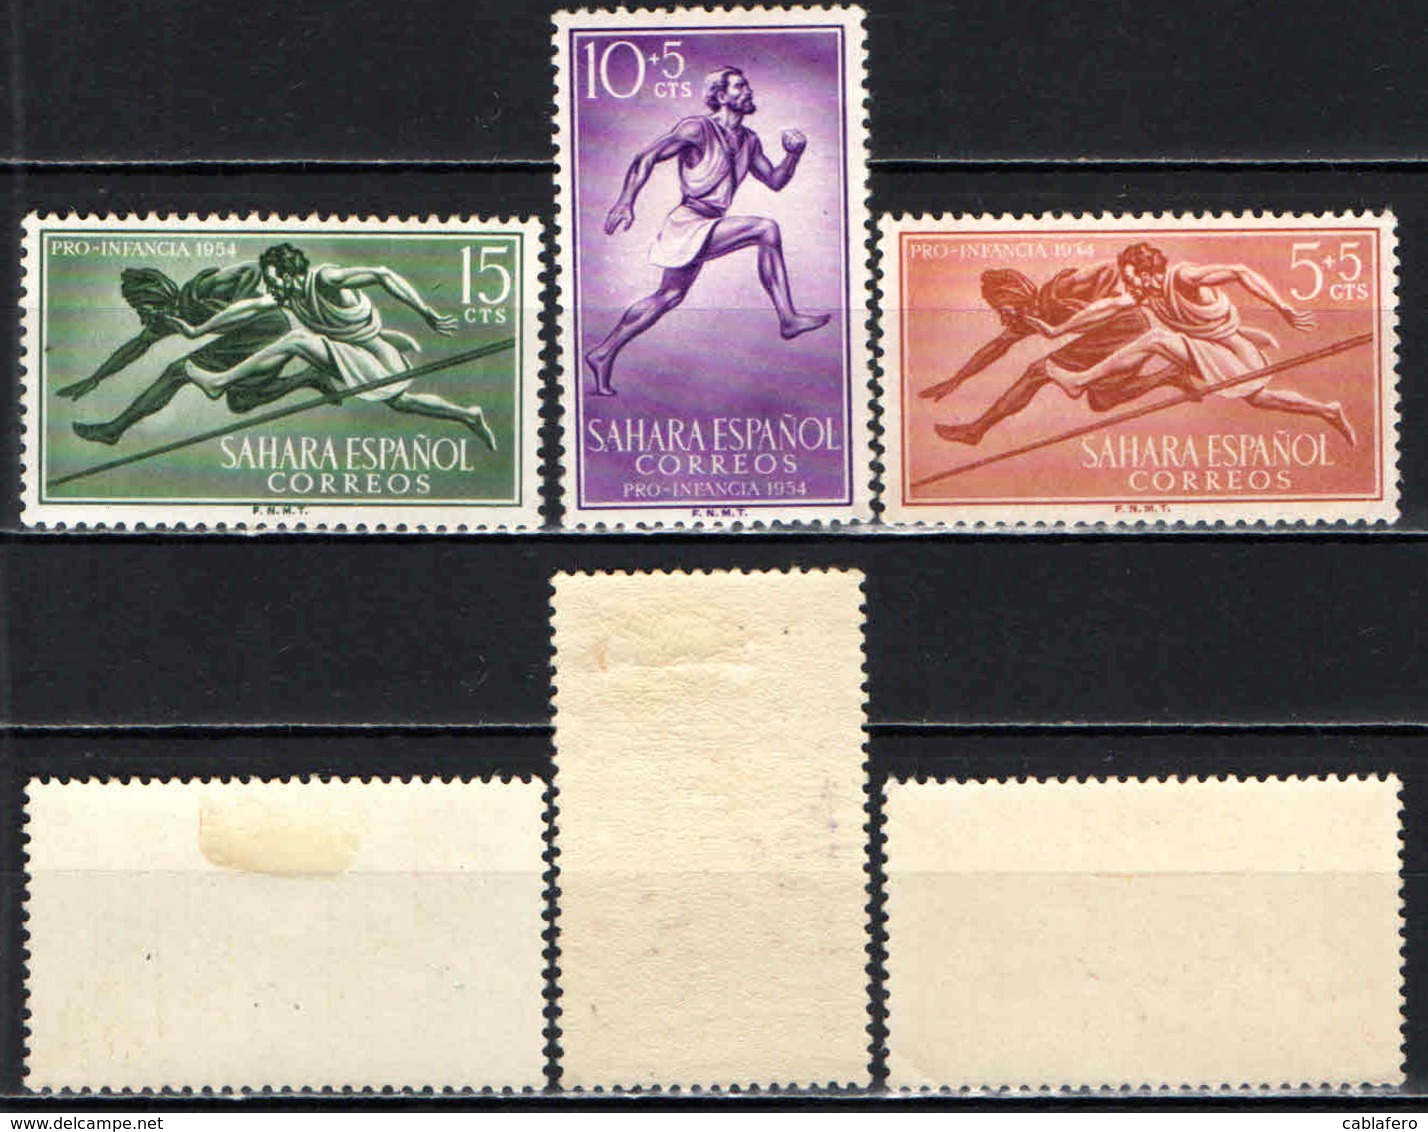 SAHARA SPAGNOLO - 1954 - Hurdlers, Runner - MH - Sahara Spagnolo